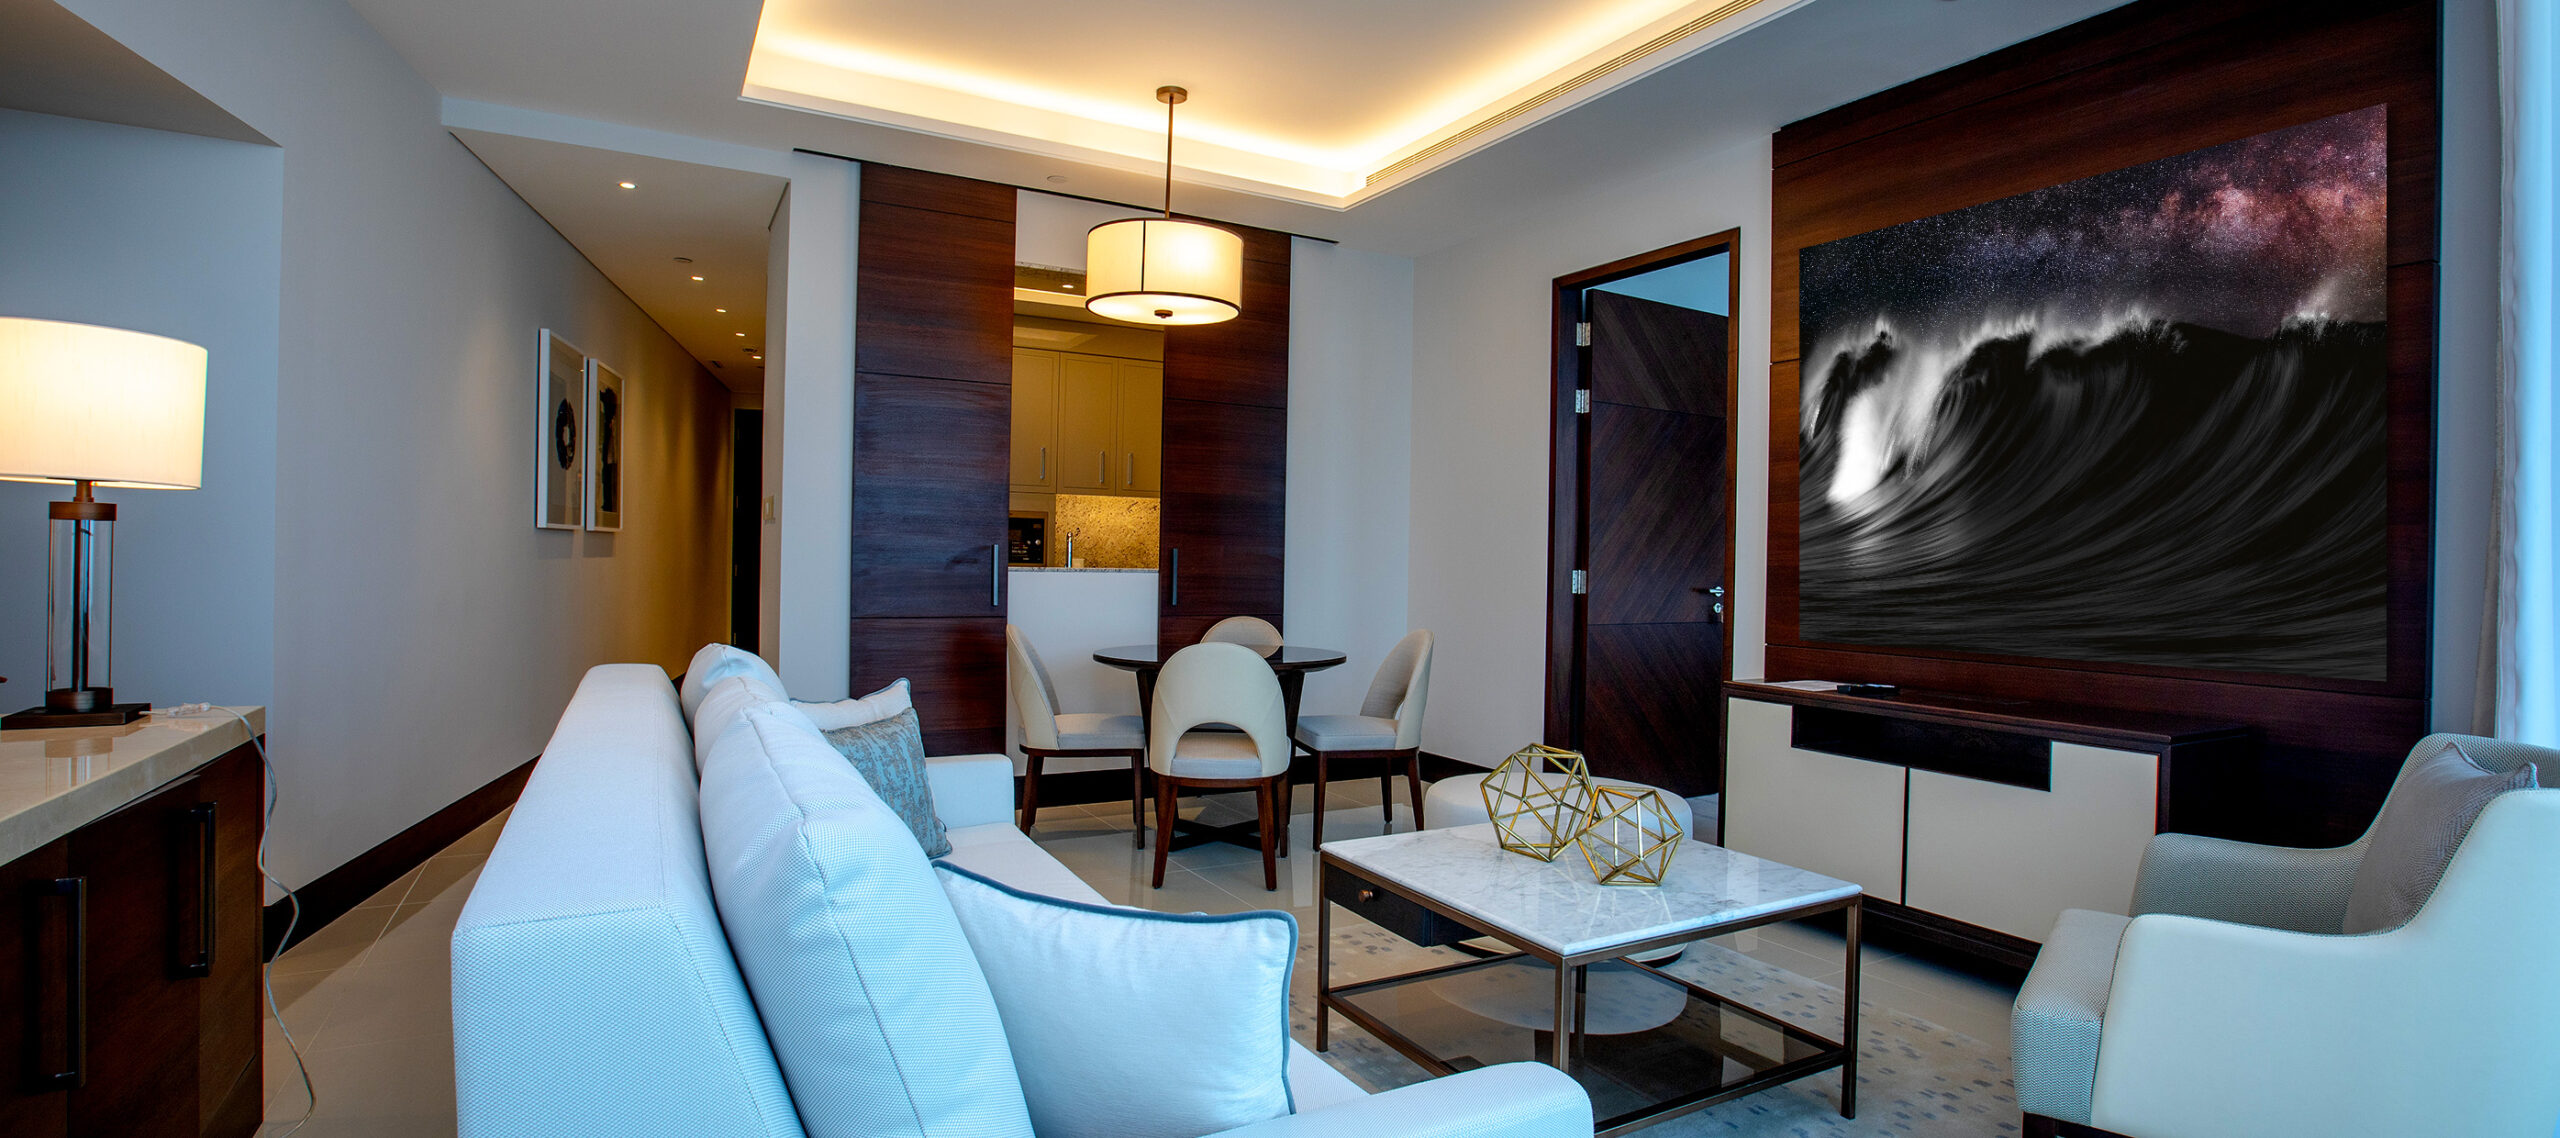 Dubai,,United,Arab,Emirates,02/23/2020,:,Luxury,Furnished,Living,Room